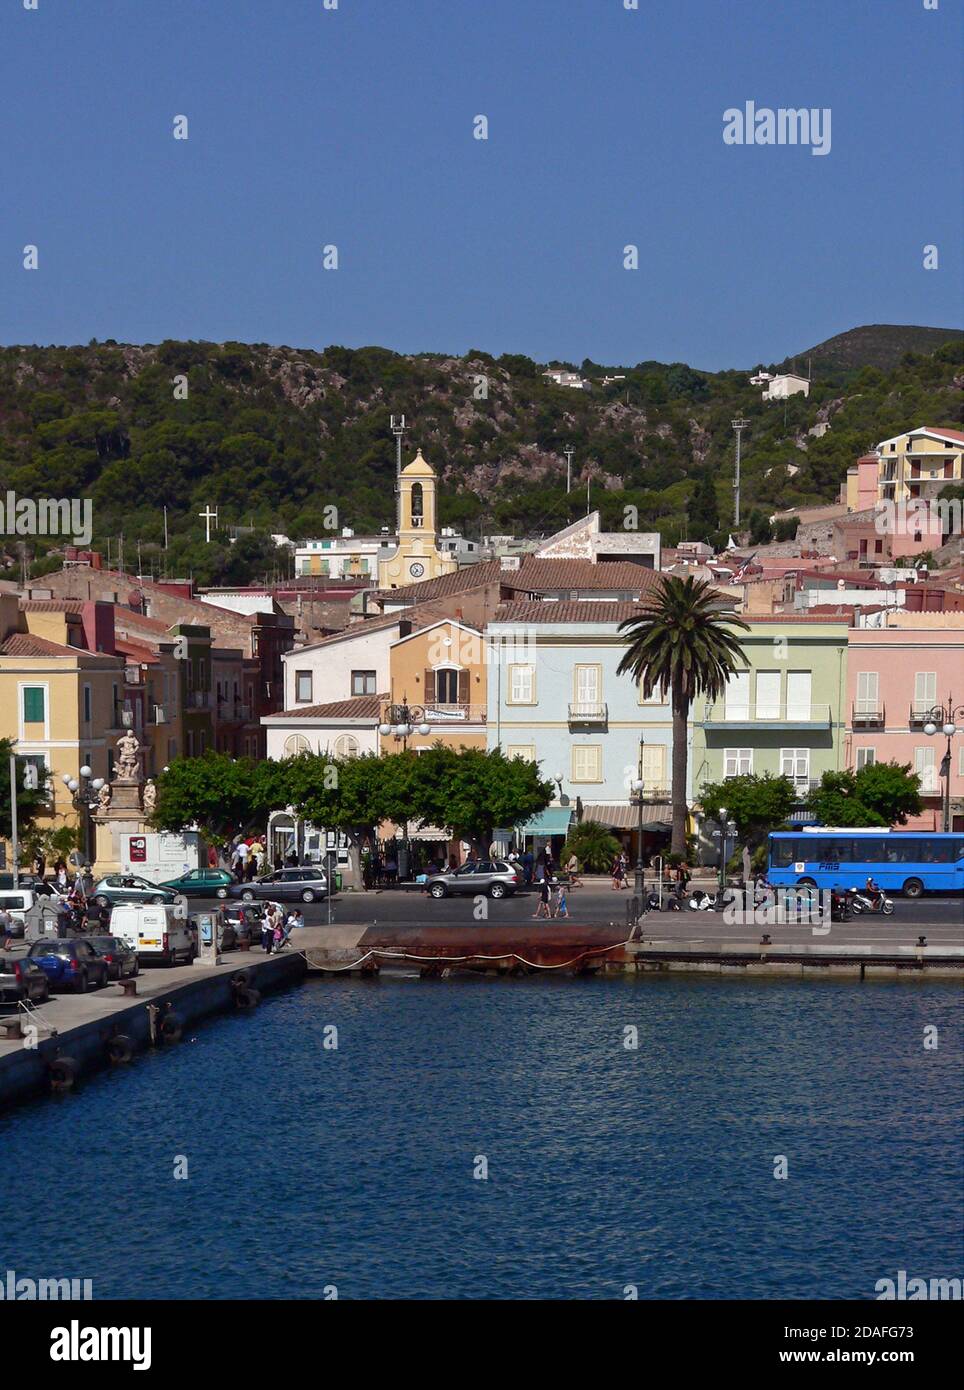 Carloforte, Isola di San Pietro, Sardegna, Italia Foto Stock